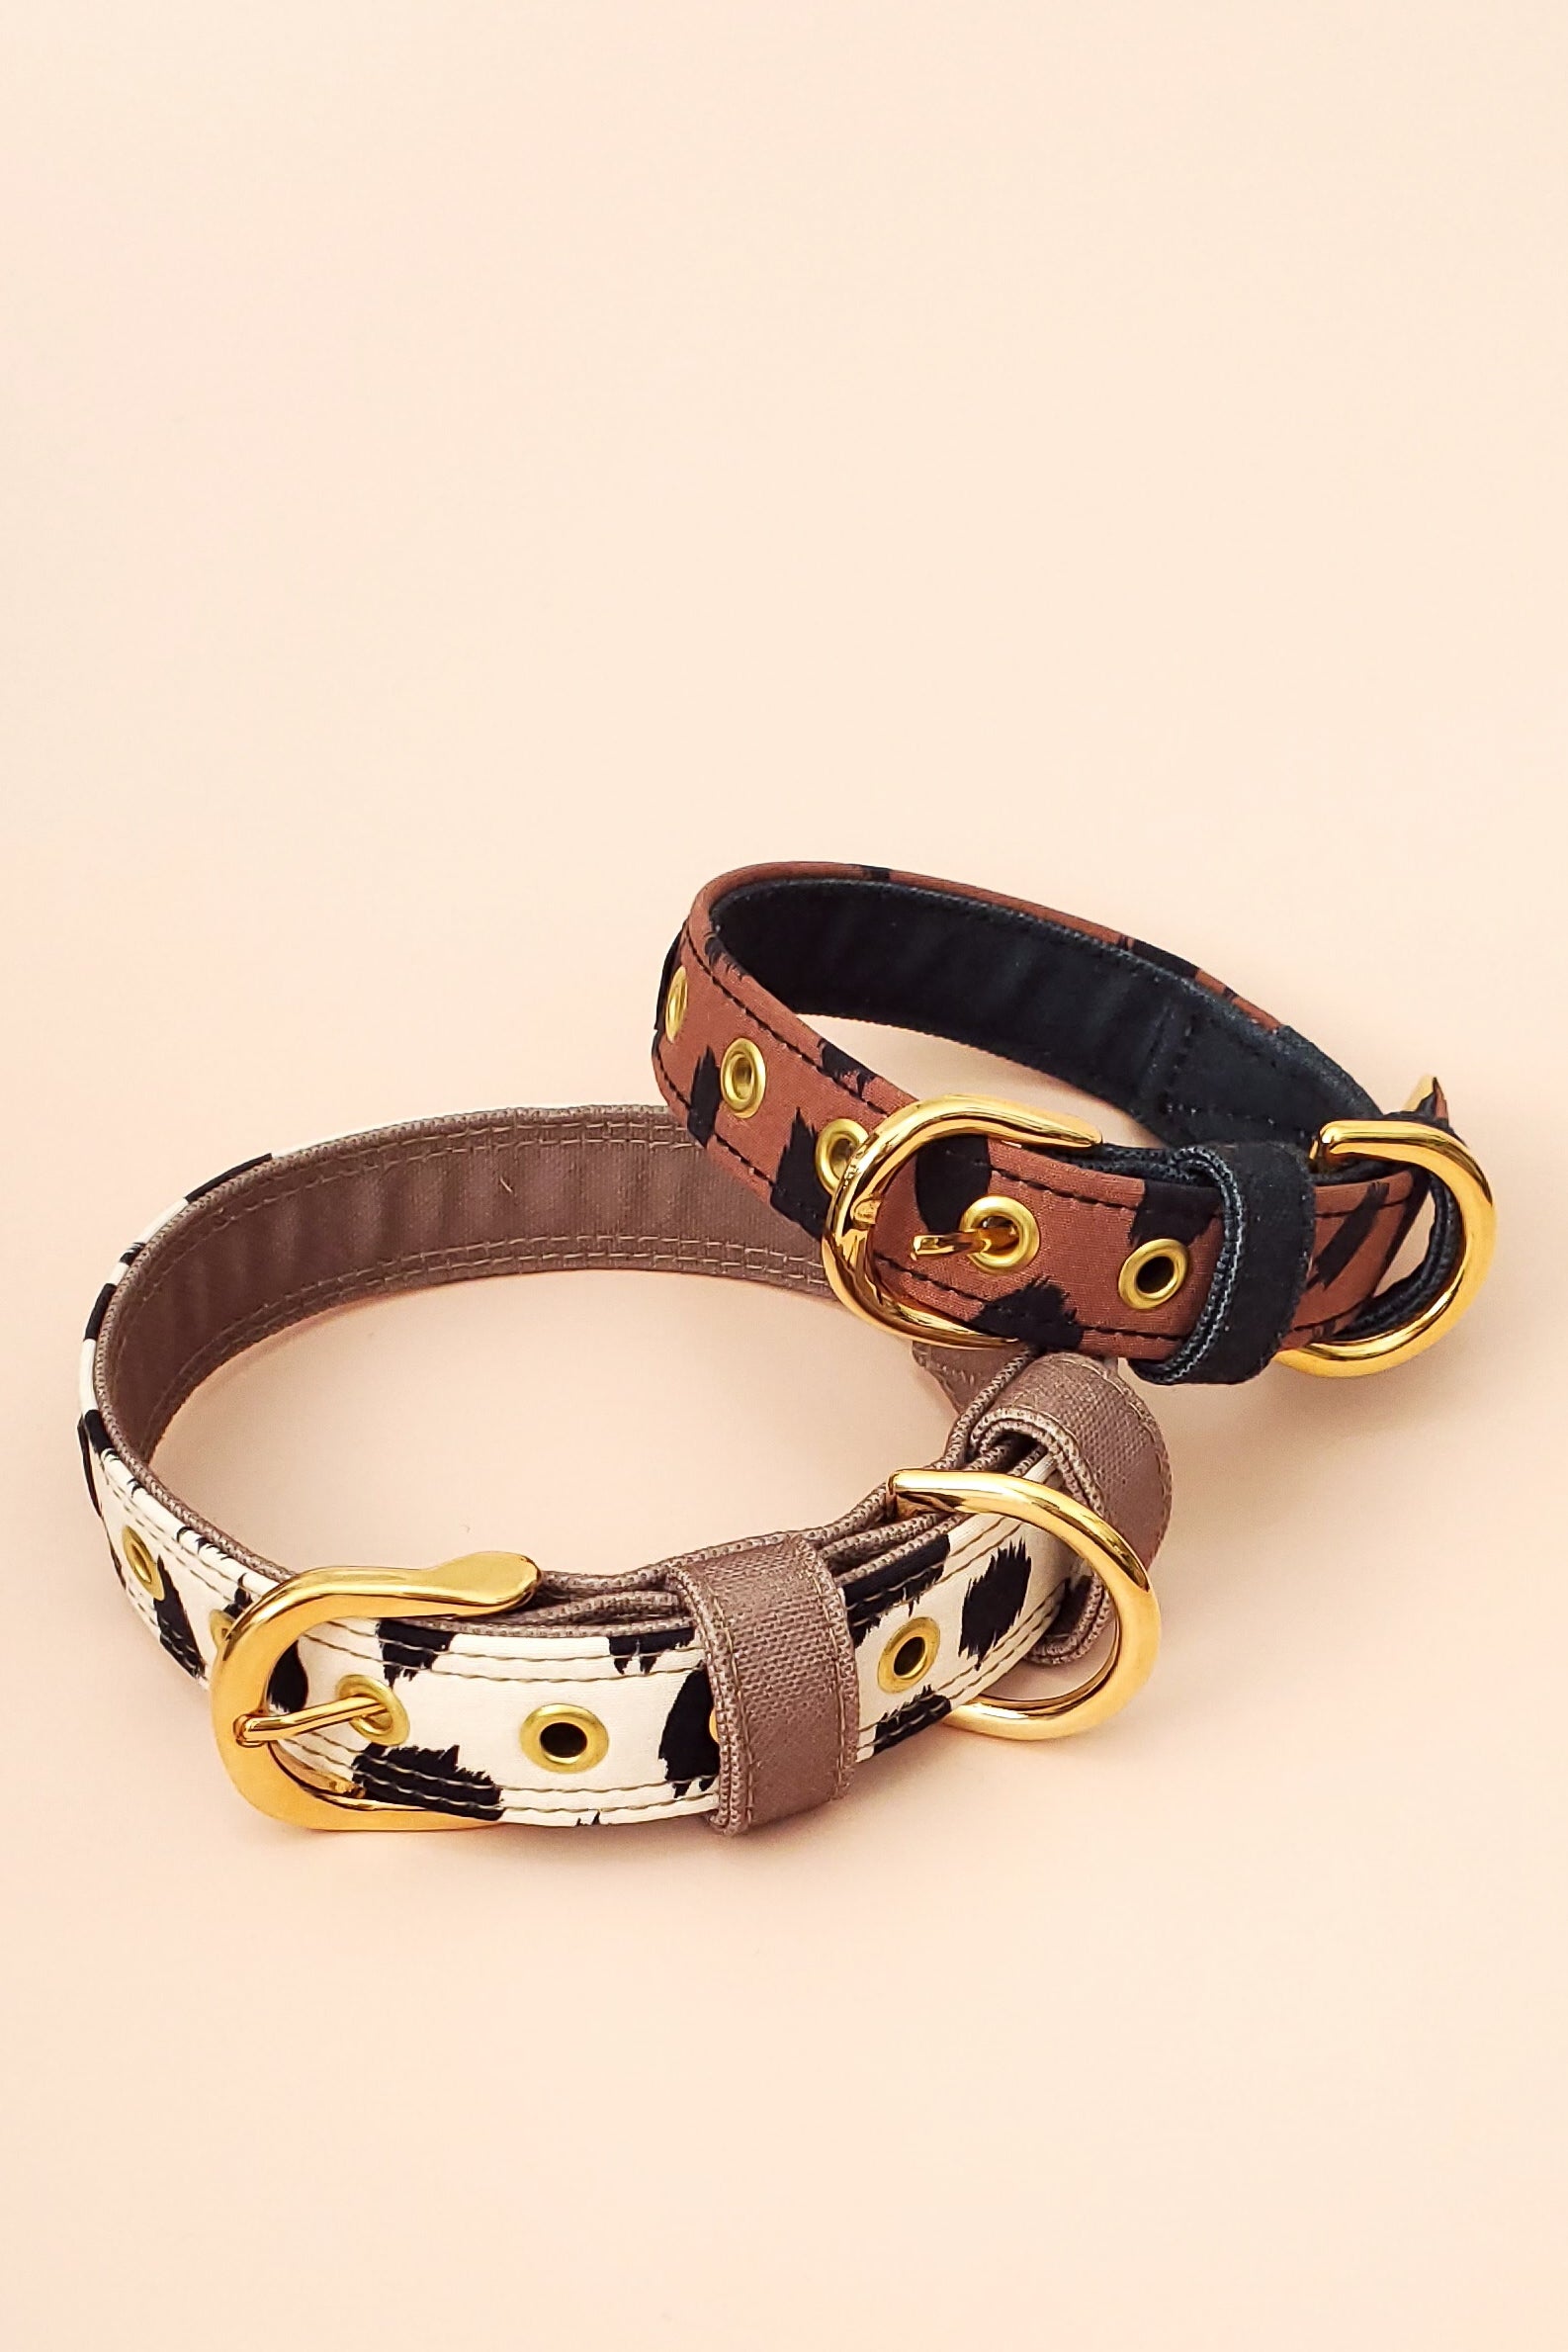 Leopard print collar【Irreplaceable限定コラボレーション】